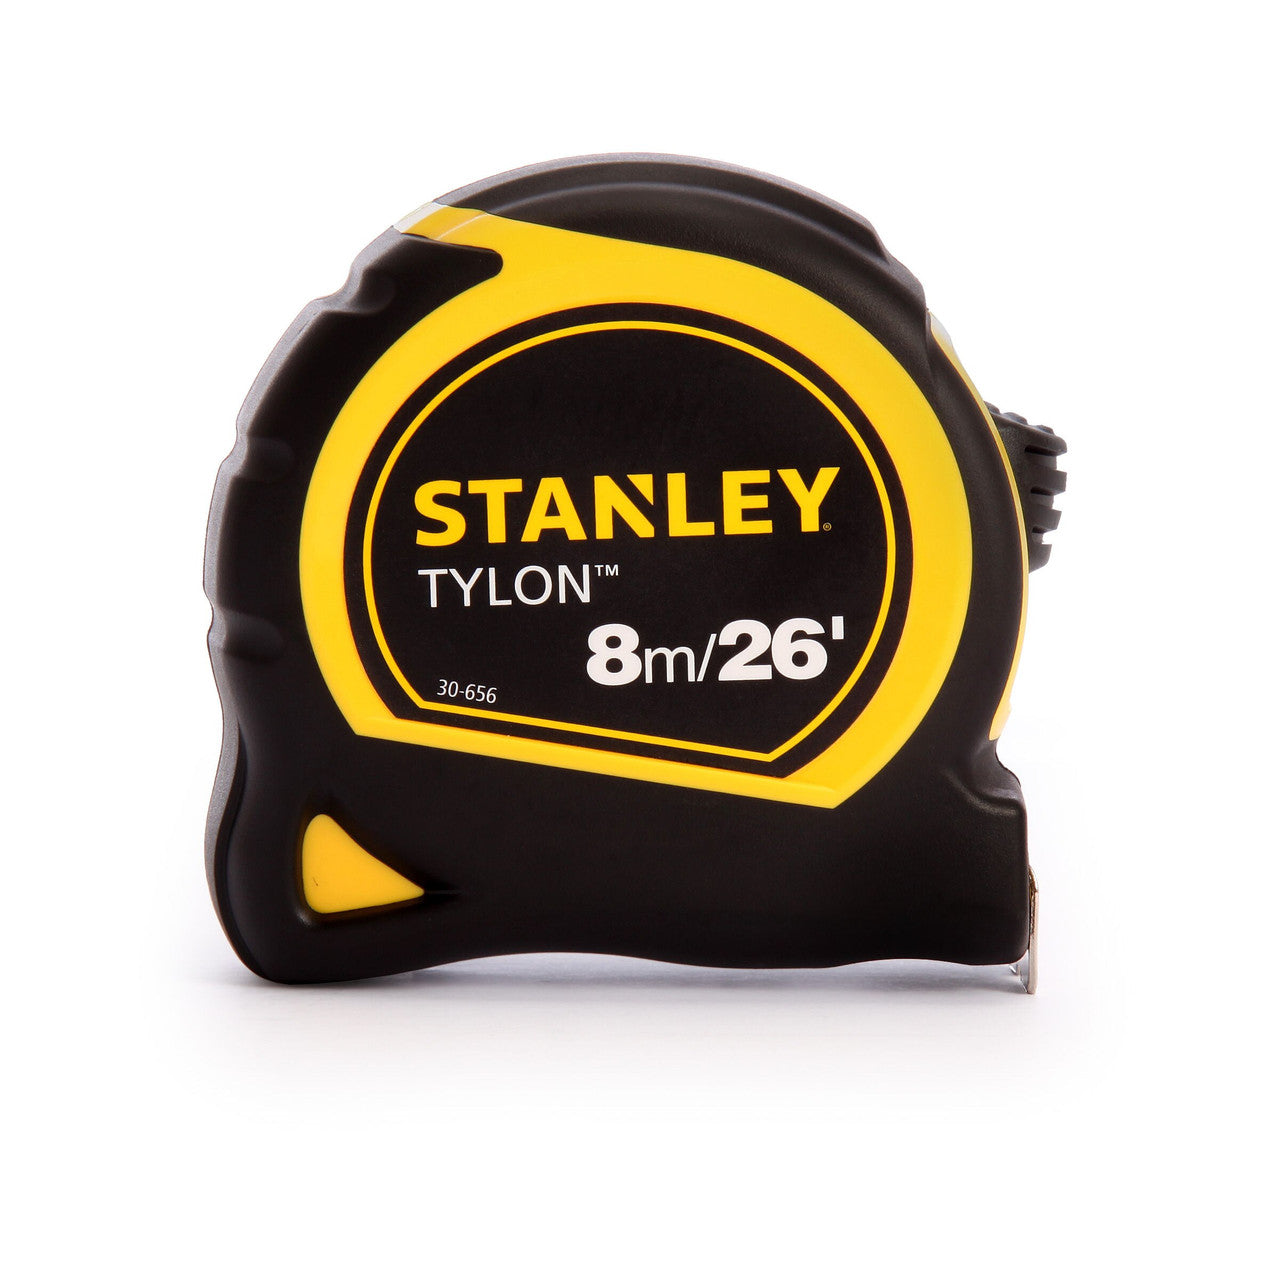 Stanley 1-30-656 Metric/Imperial Tylon Pocket Tape Measure 8m